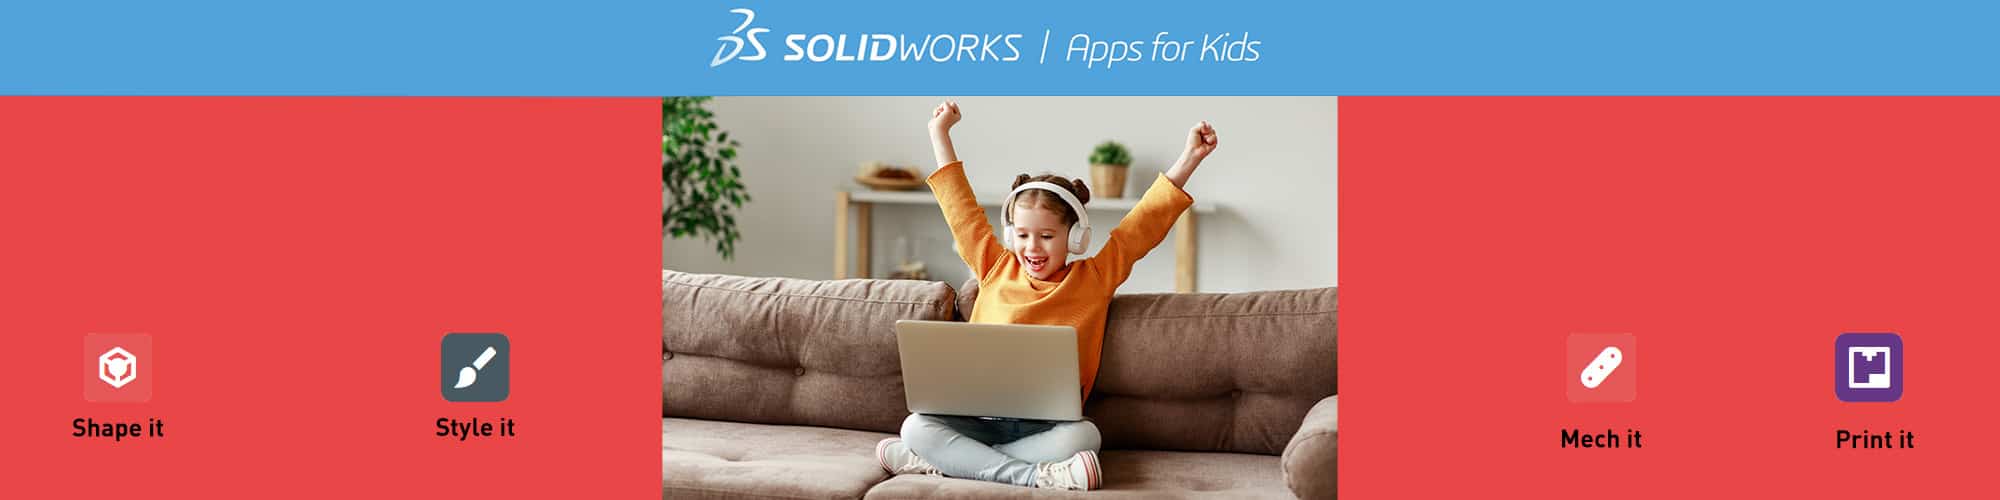 SOLIDWORKS Apps for Kids